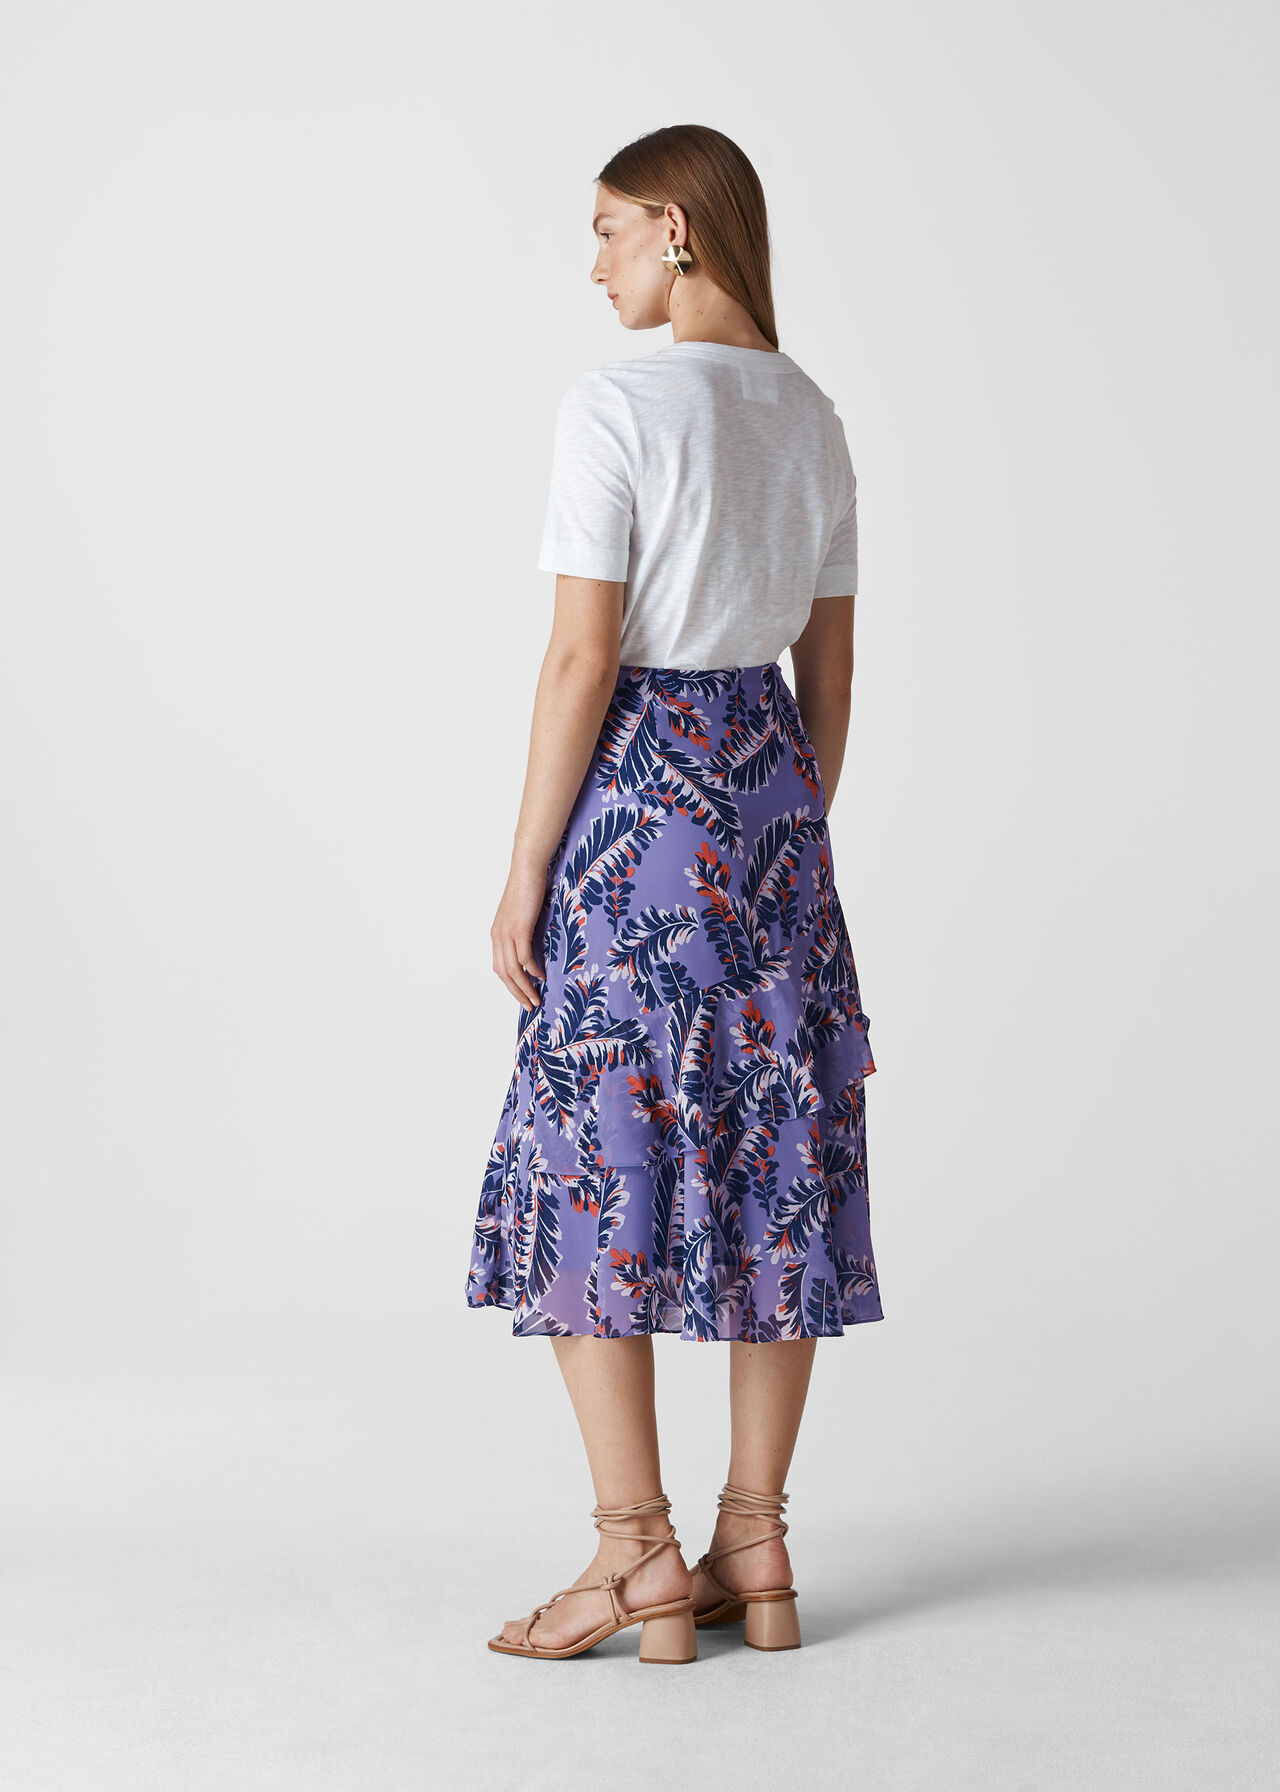 Josephine Print Frill Skirt Purple/Multi